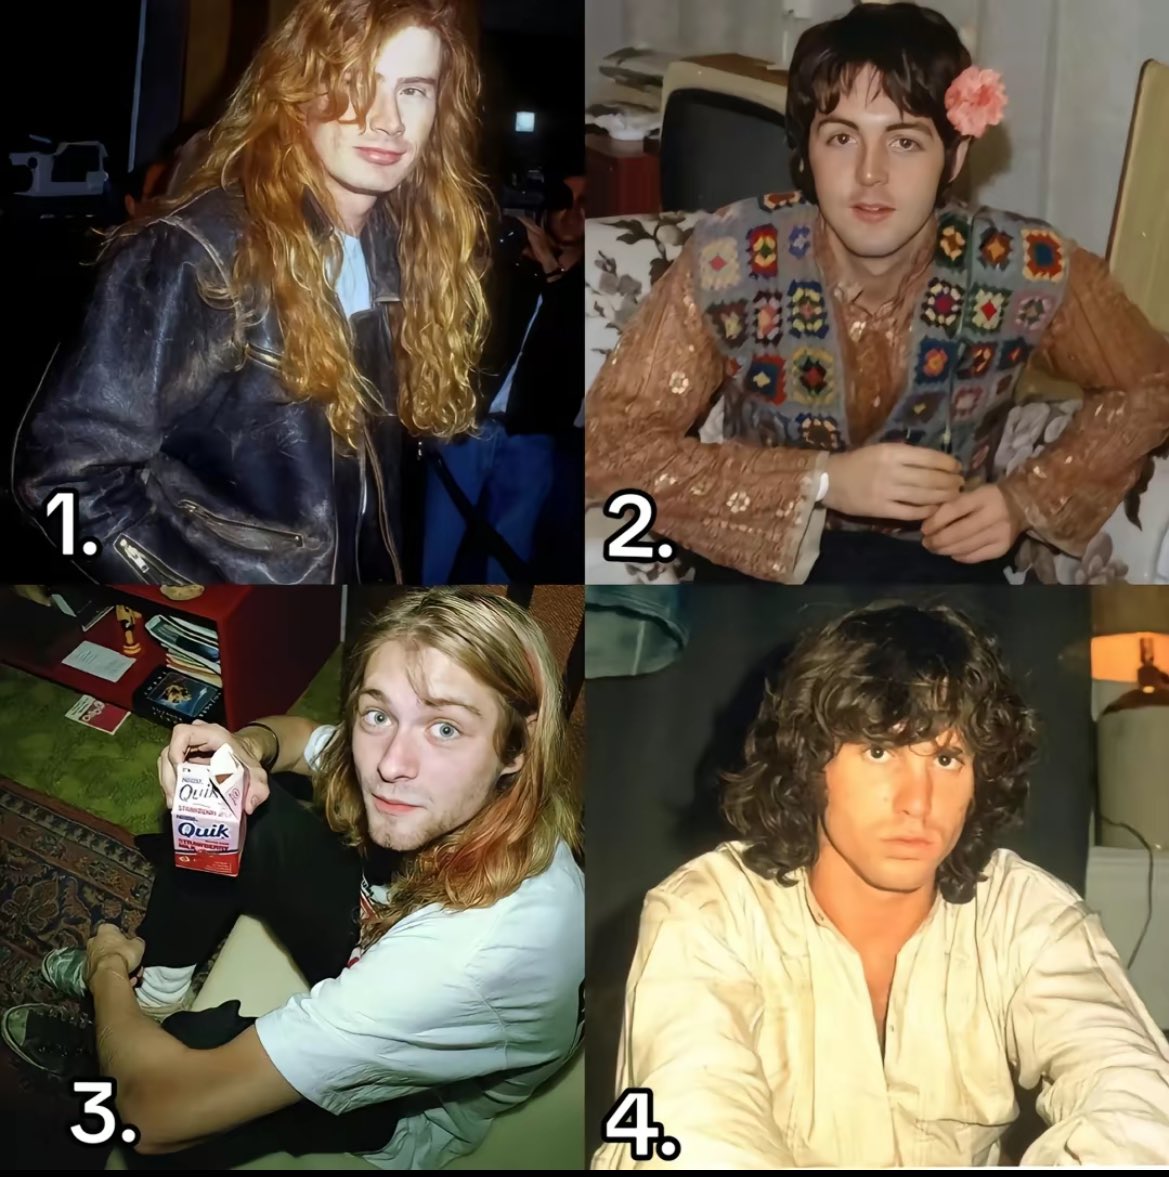 Which one do you choose?

- Dave Mustaine
- Paul McCartney 
- Kurt Cobain
- Jim Morrison